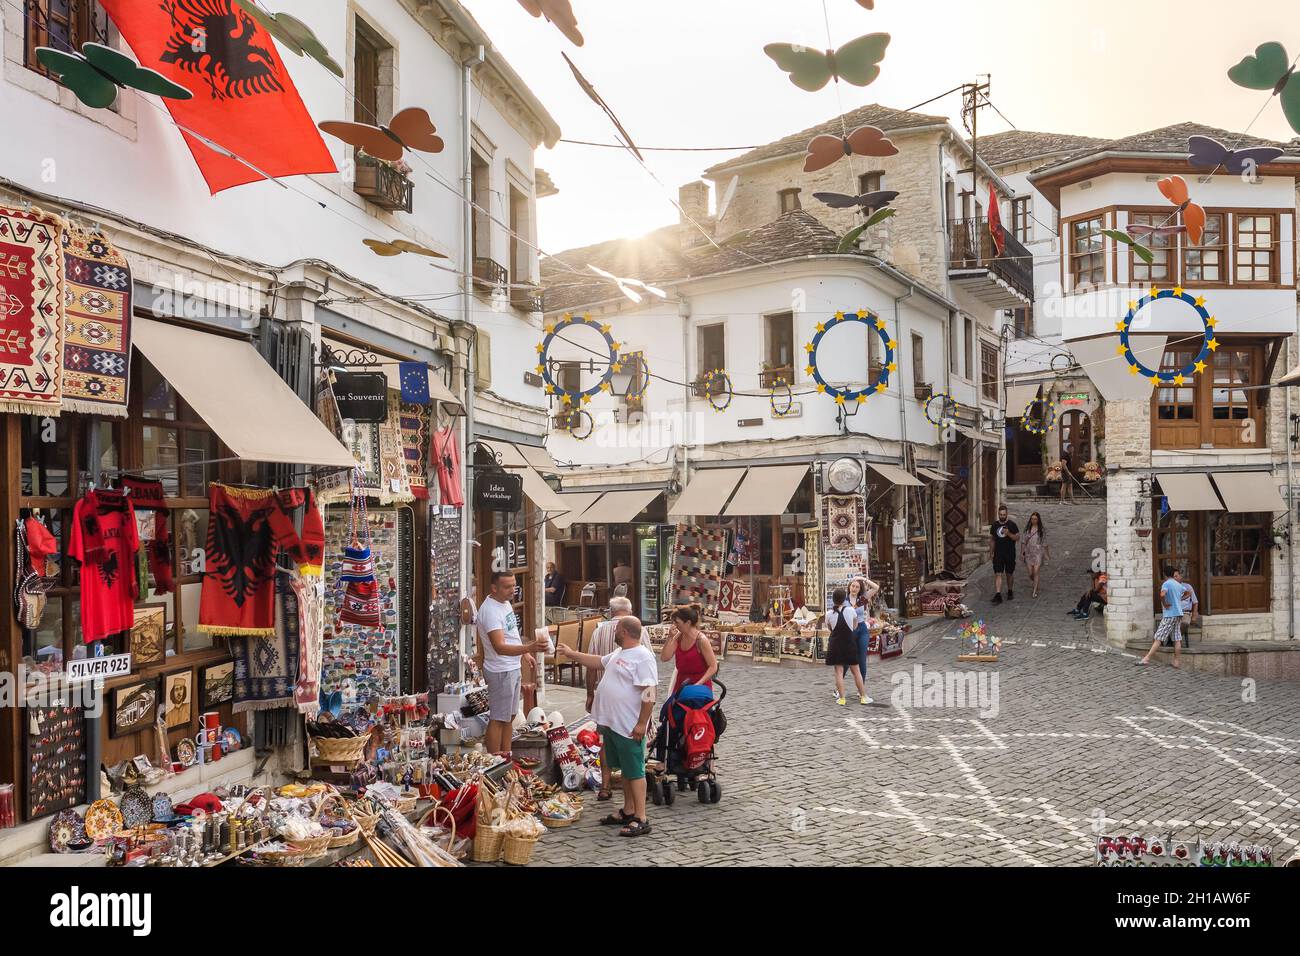 Street scene with souvenir shops in old town of Gjirokaster in Albania. Stock Photo